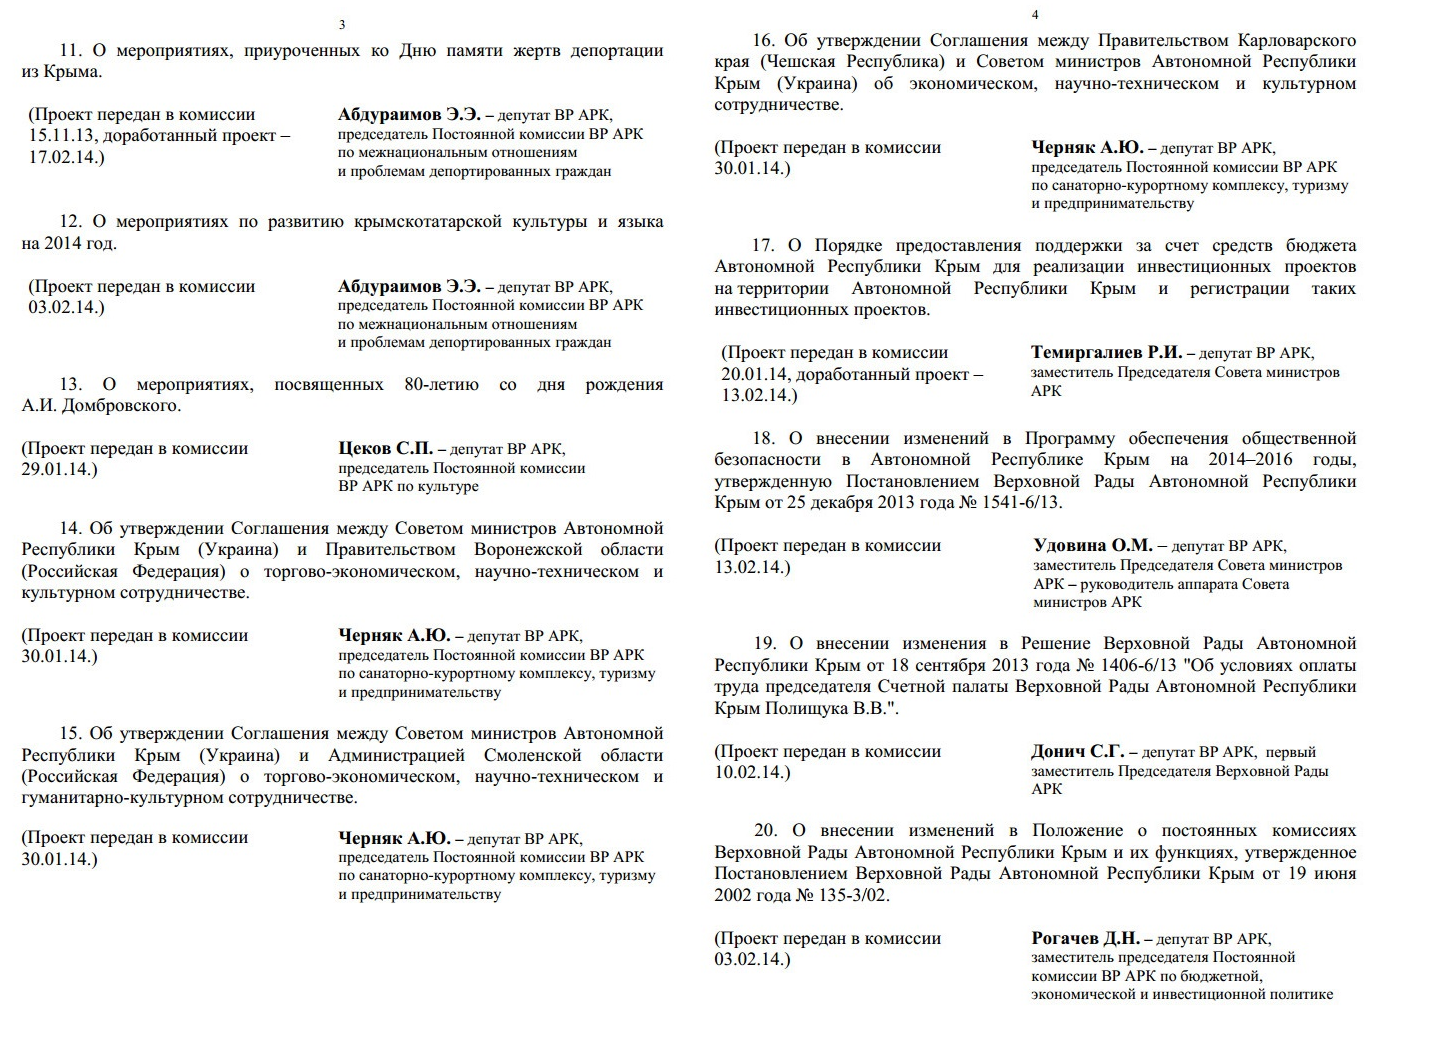 http://www.rada.crimea.ua/content/uploads/files/povestki/190214.pdf